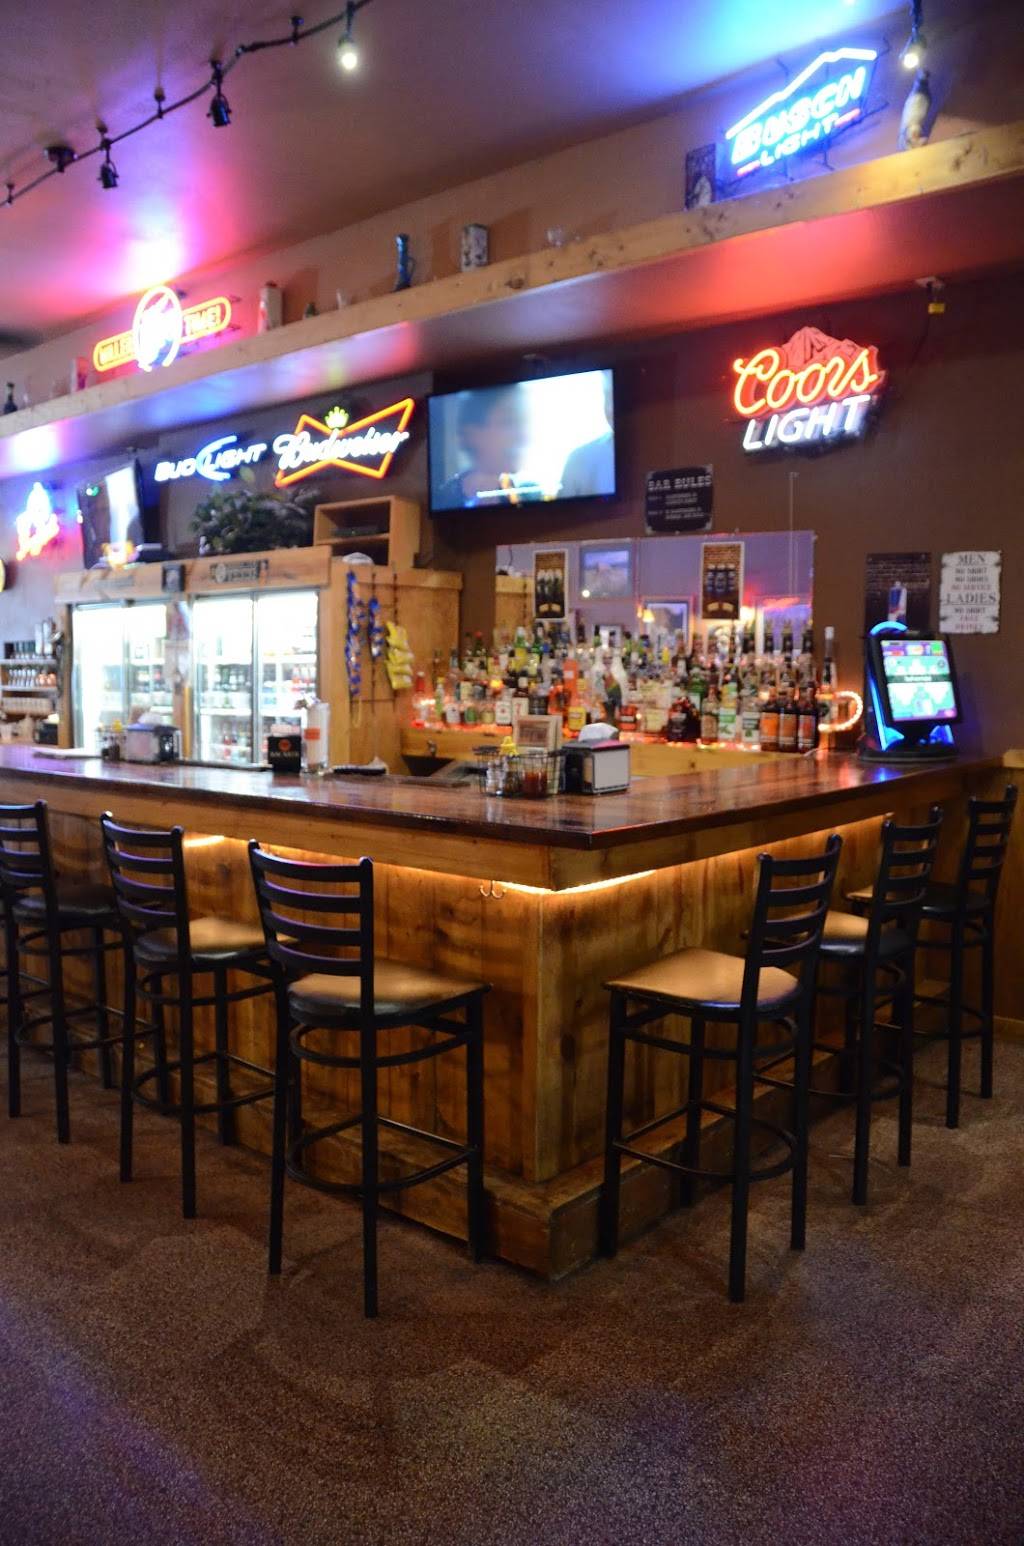 Waukon City Club Bar And Grill | restaurant | 39 W Main St, Waukon, IA 52172, USA | 5635682656 OR +1 563-568-2656